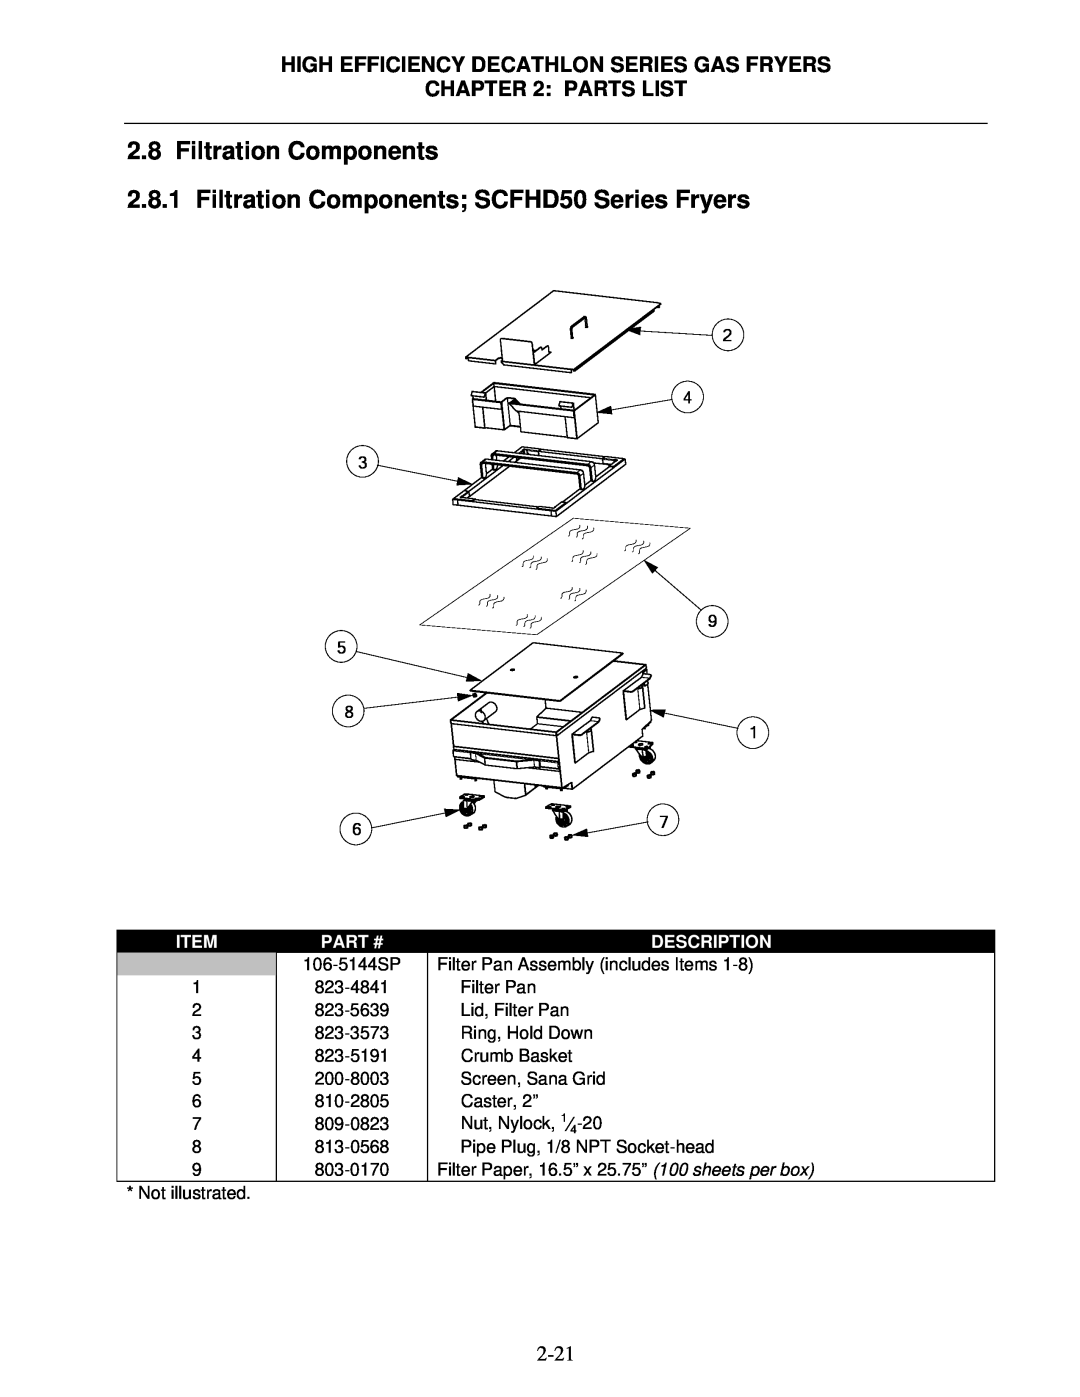 Frymaster FPHD Filtration Components, High Efficiency Decathlon Series Gas Fryers, Parts List, Itempart #, Description 